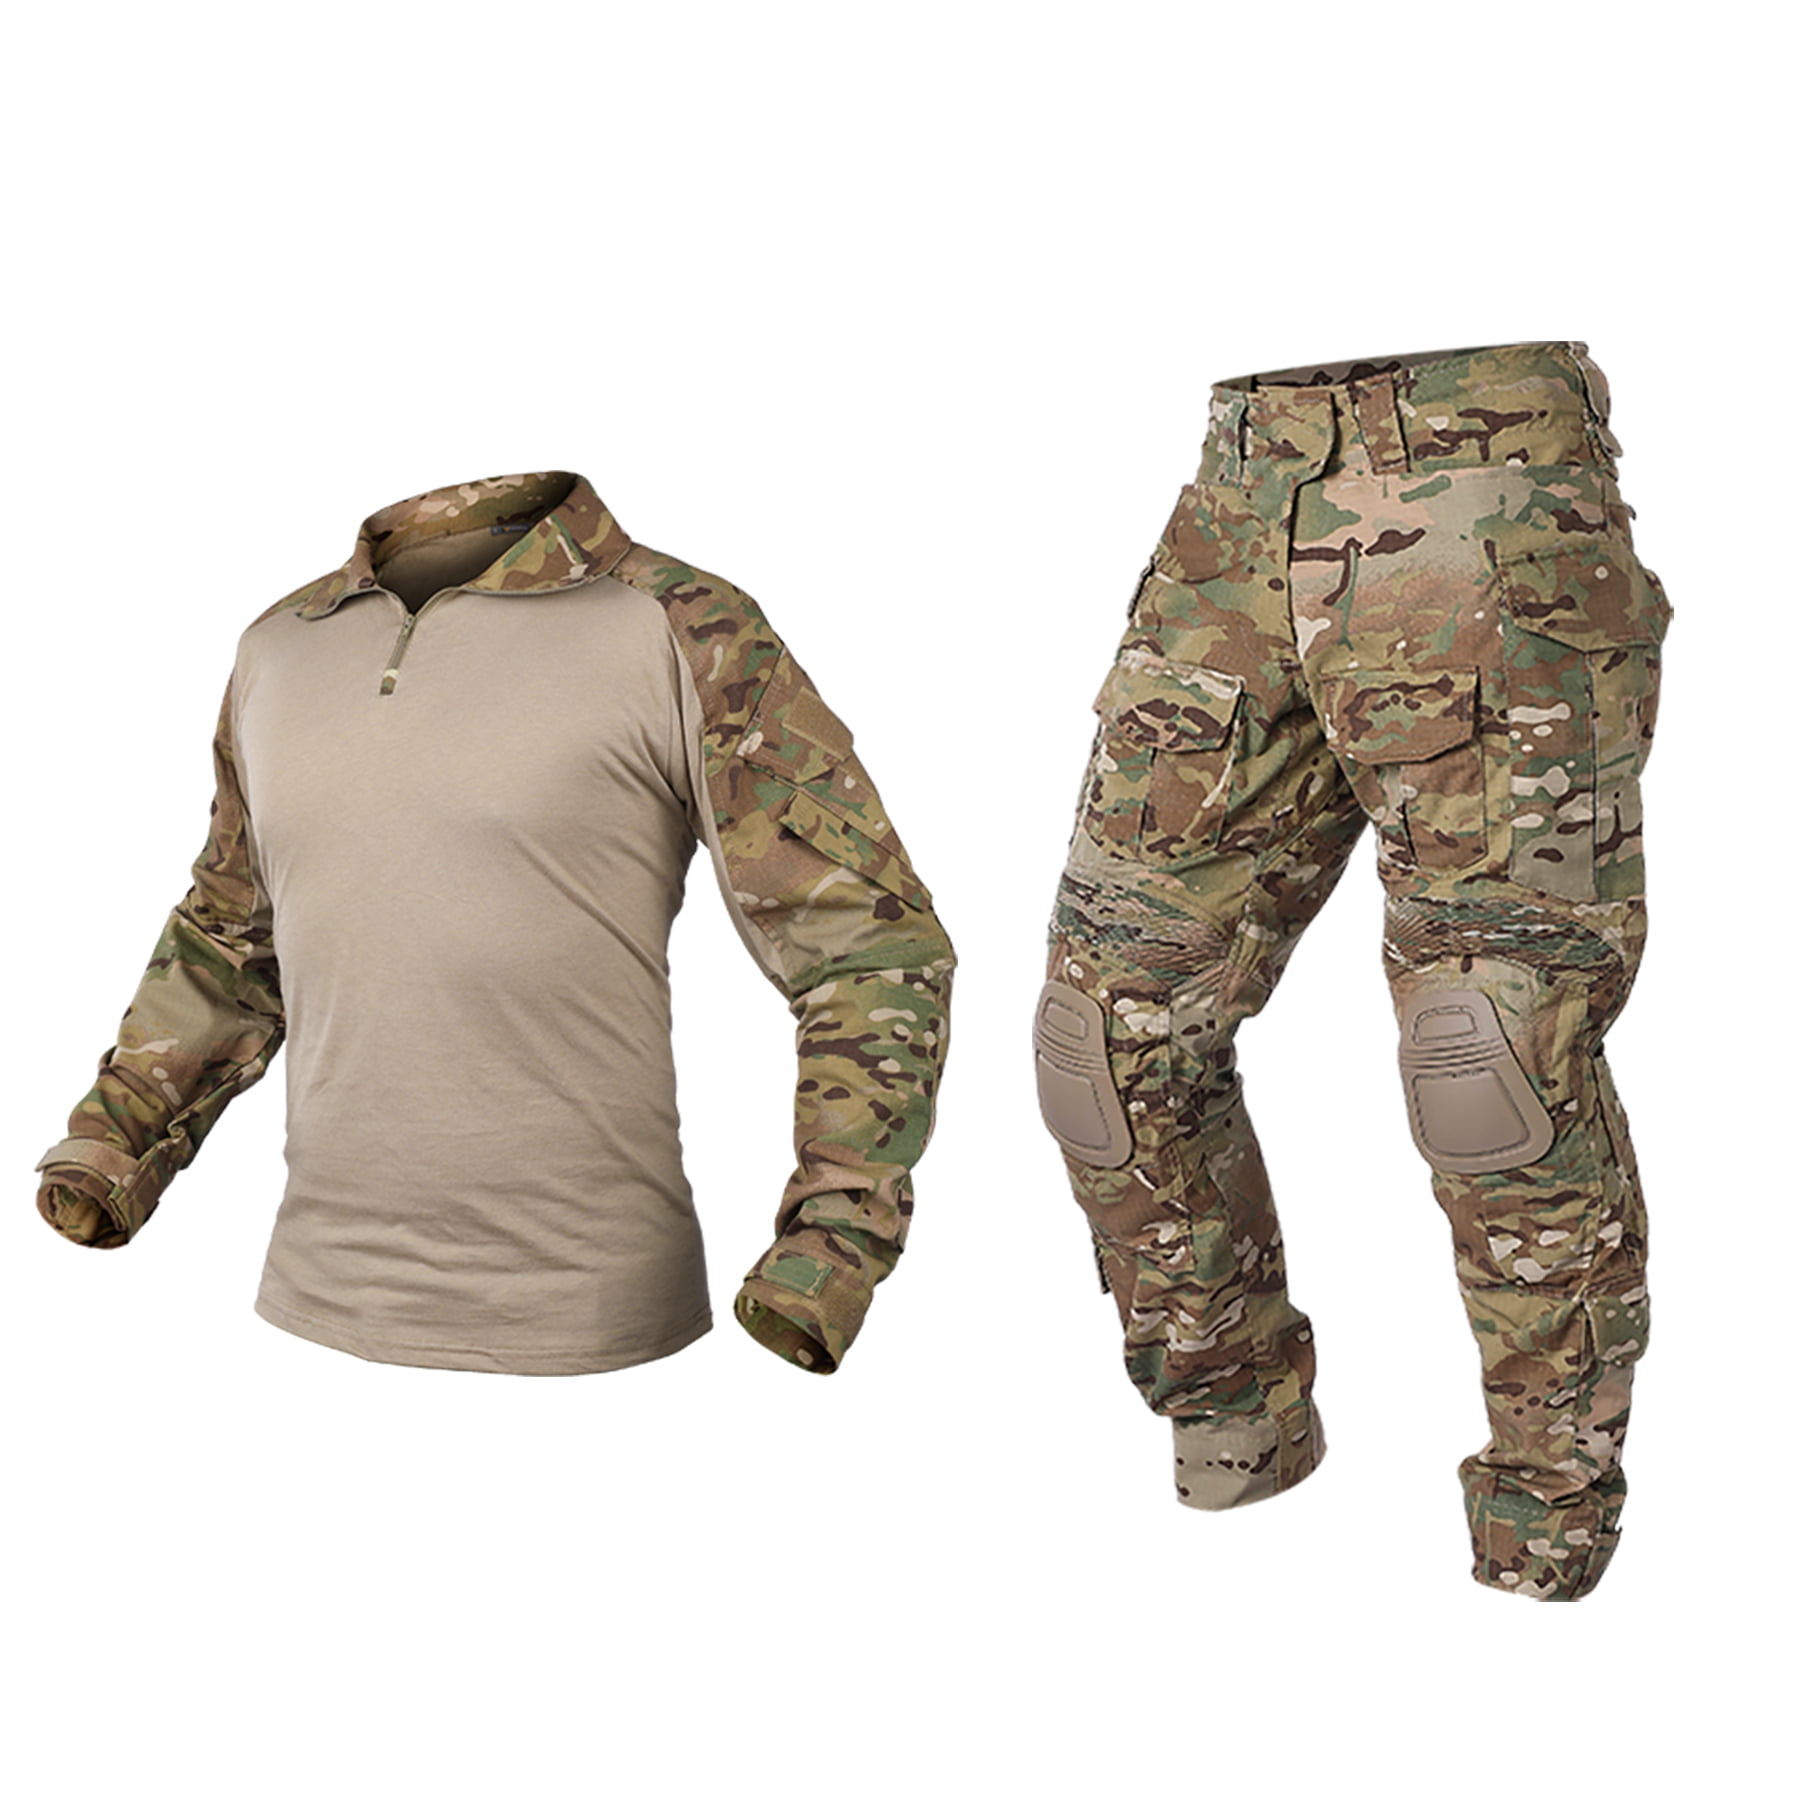 IDOGEAR Tactical G3 Combat Uniform Shirt & Pants BDU Set Gear Clothing MultiCam 